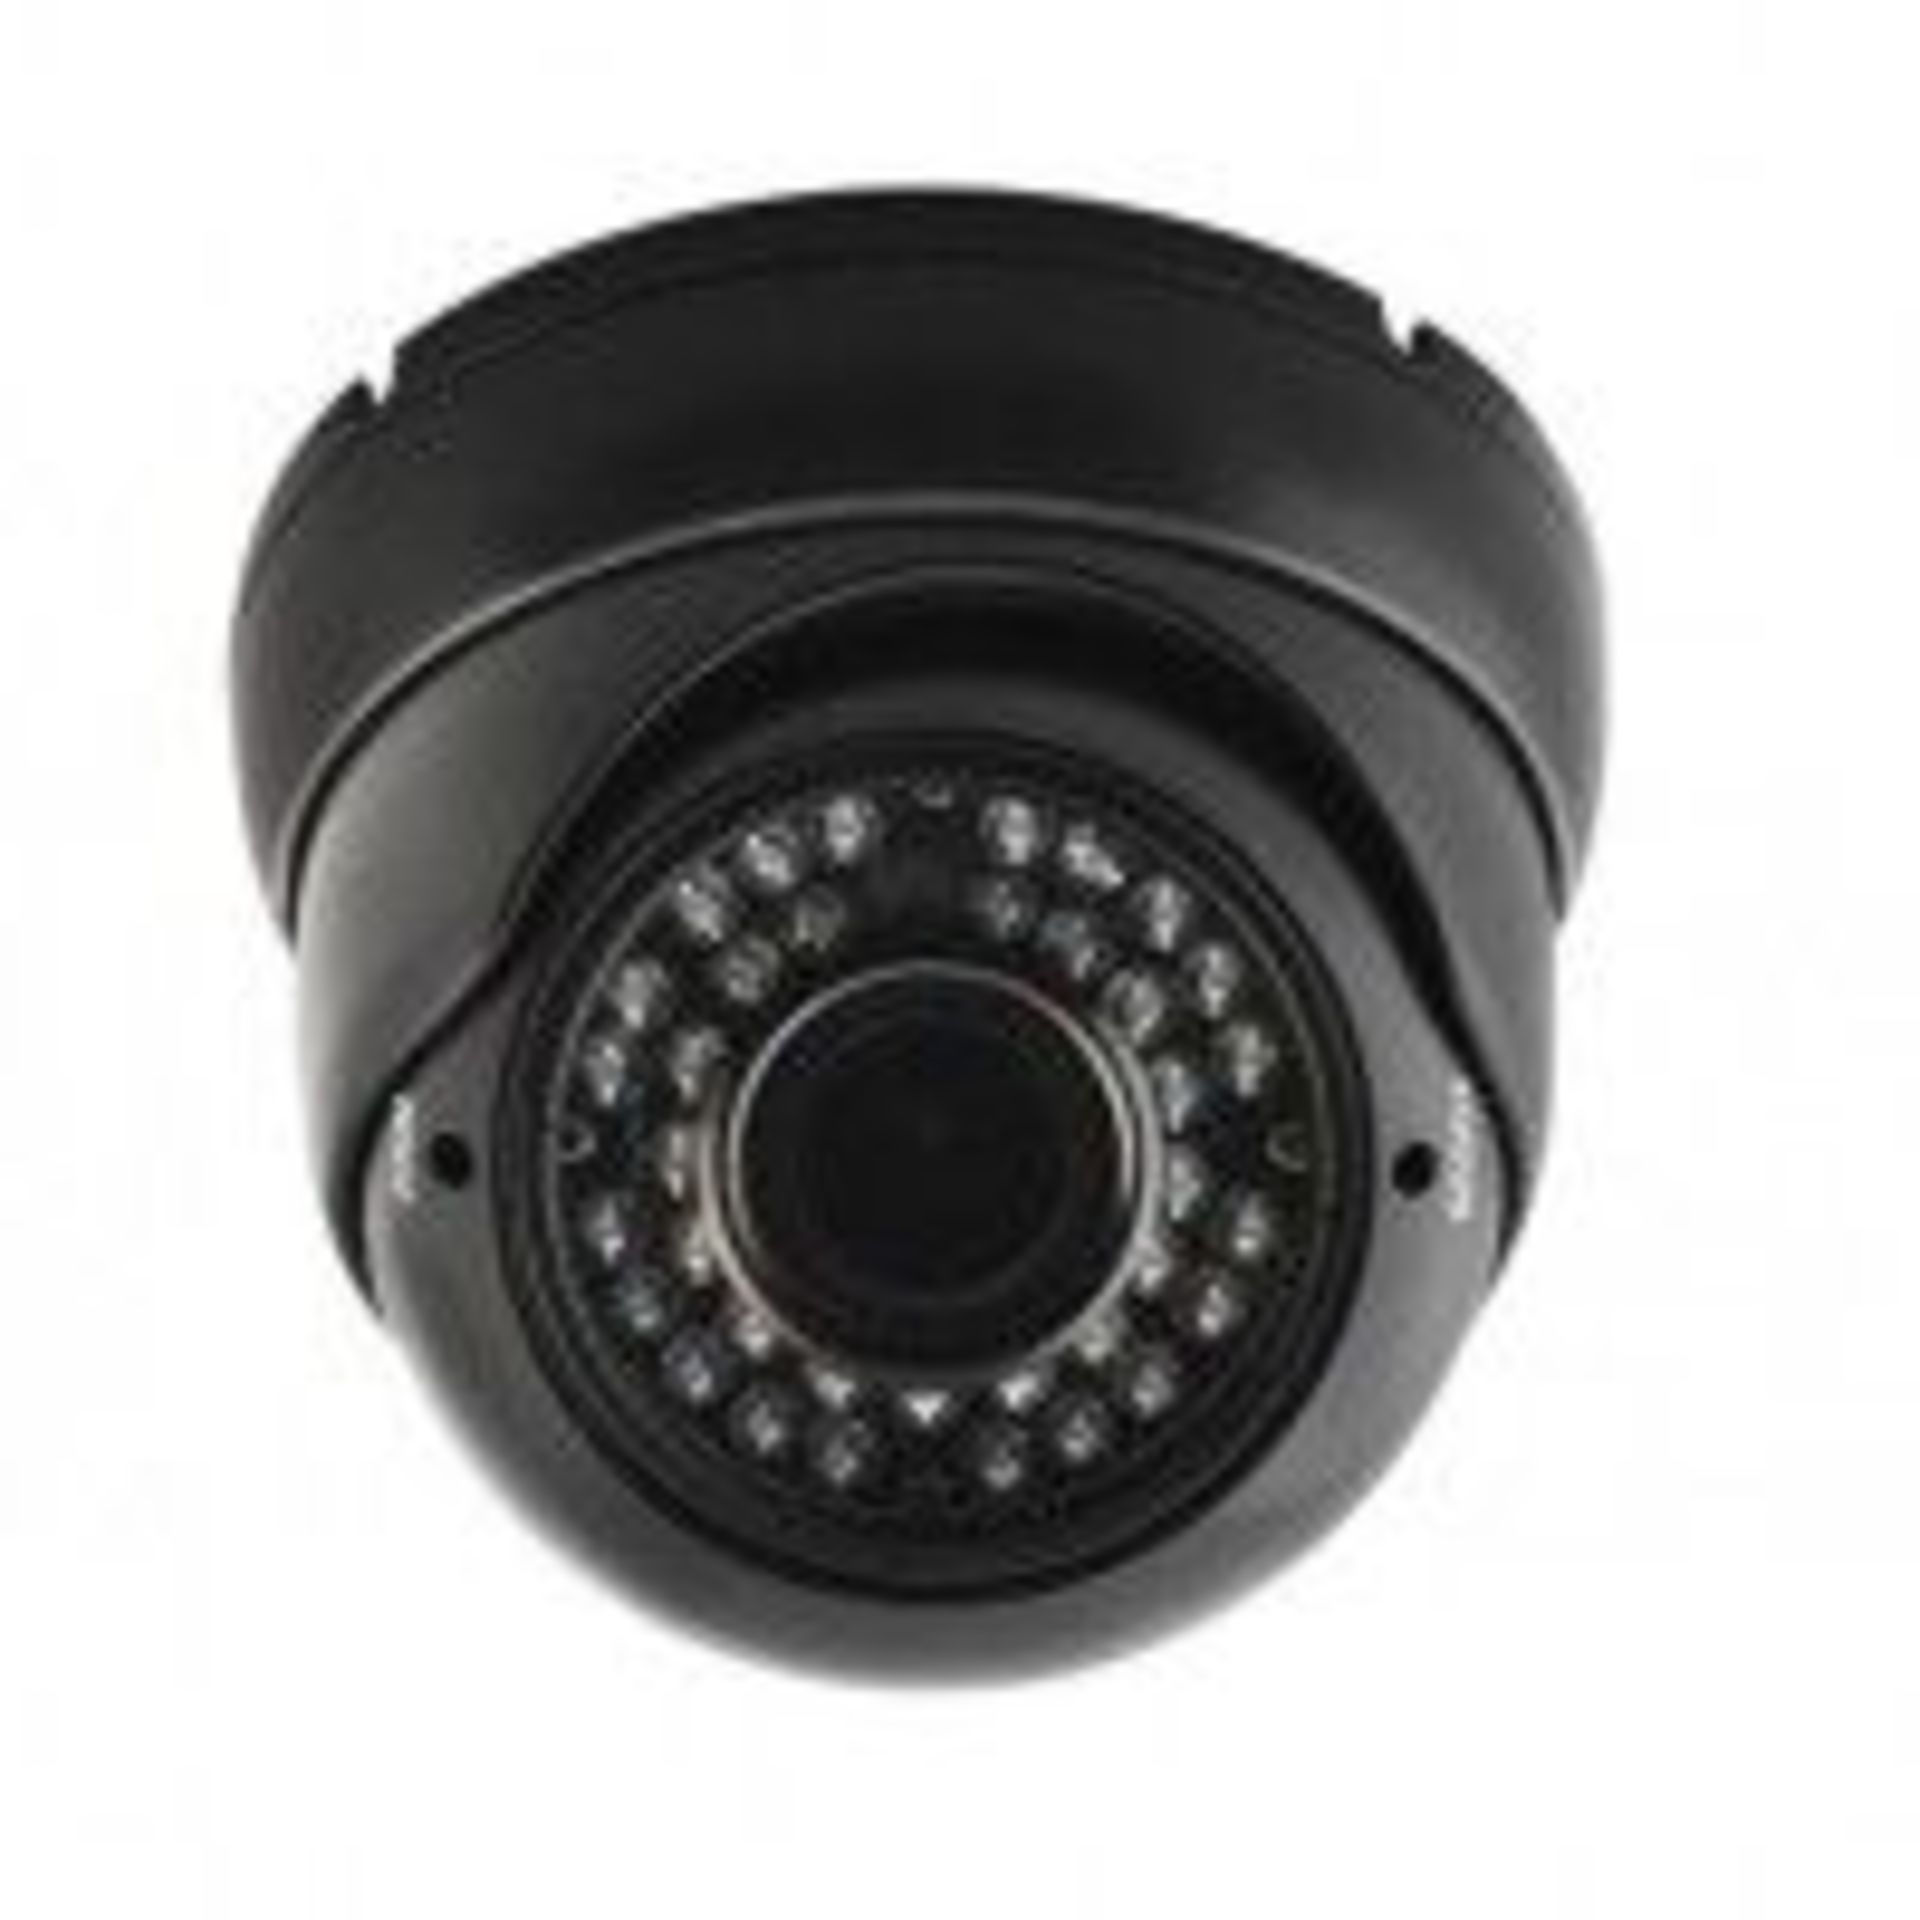 V *TRADE QTY* Brand New Avtech 540TVL Eyeball IR Dome Camera with OSD Cable- 1/3" Sony Lens CCD-